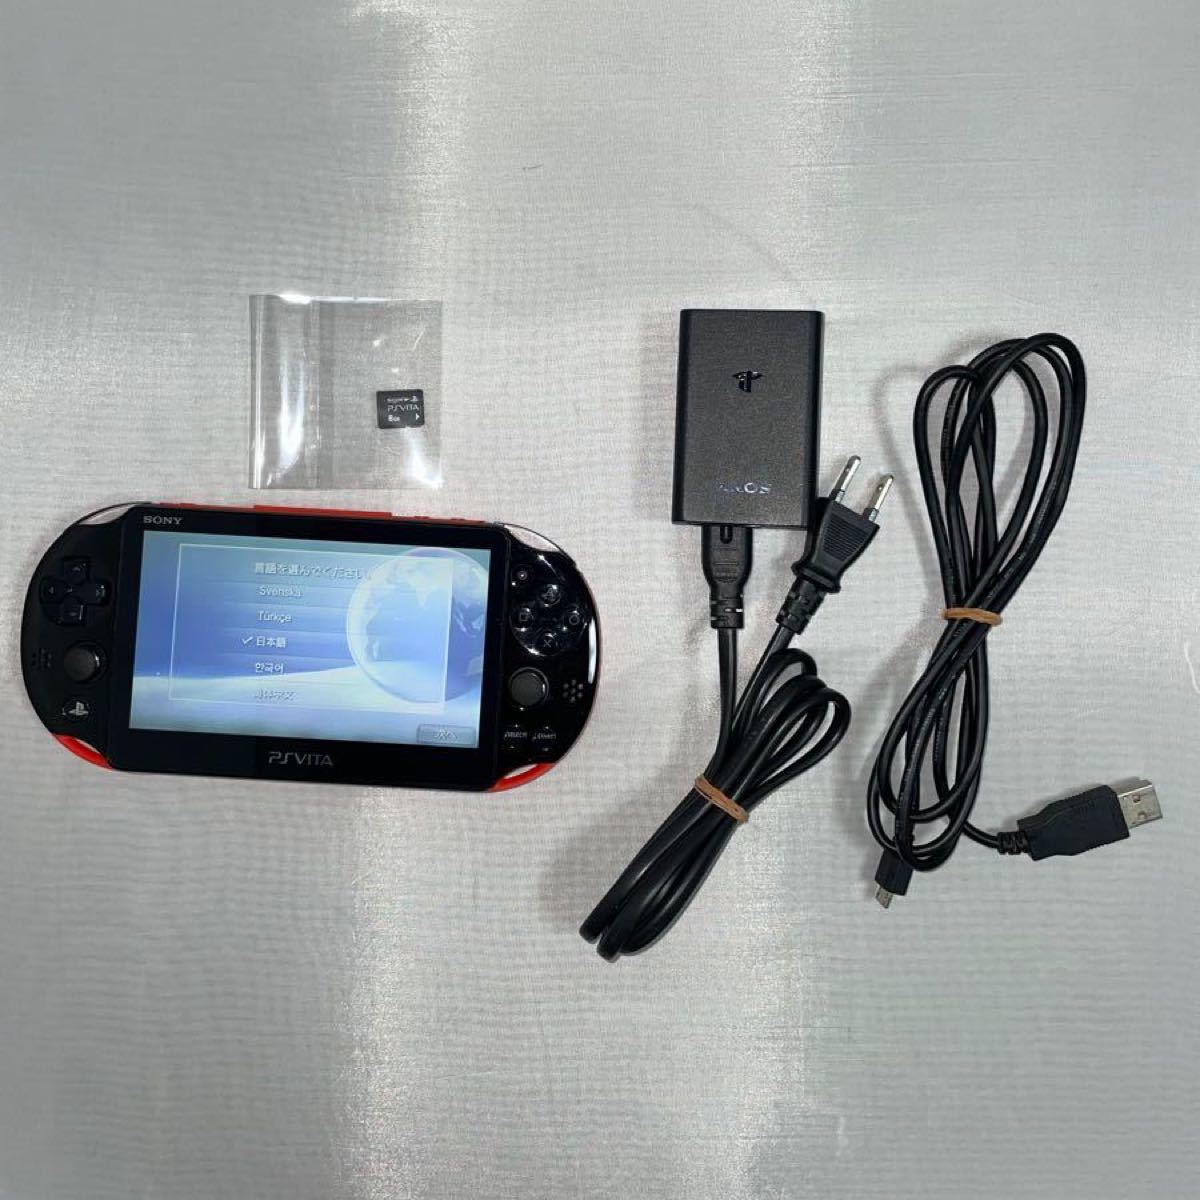 PlayStation Vita PCH-2000 ブラック/レッド